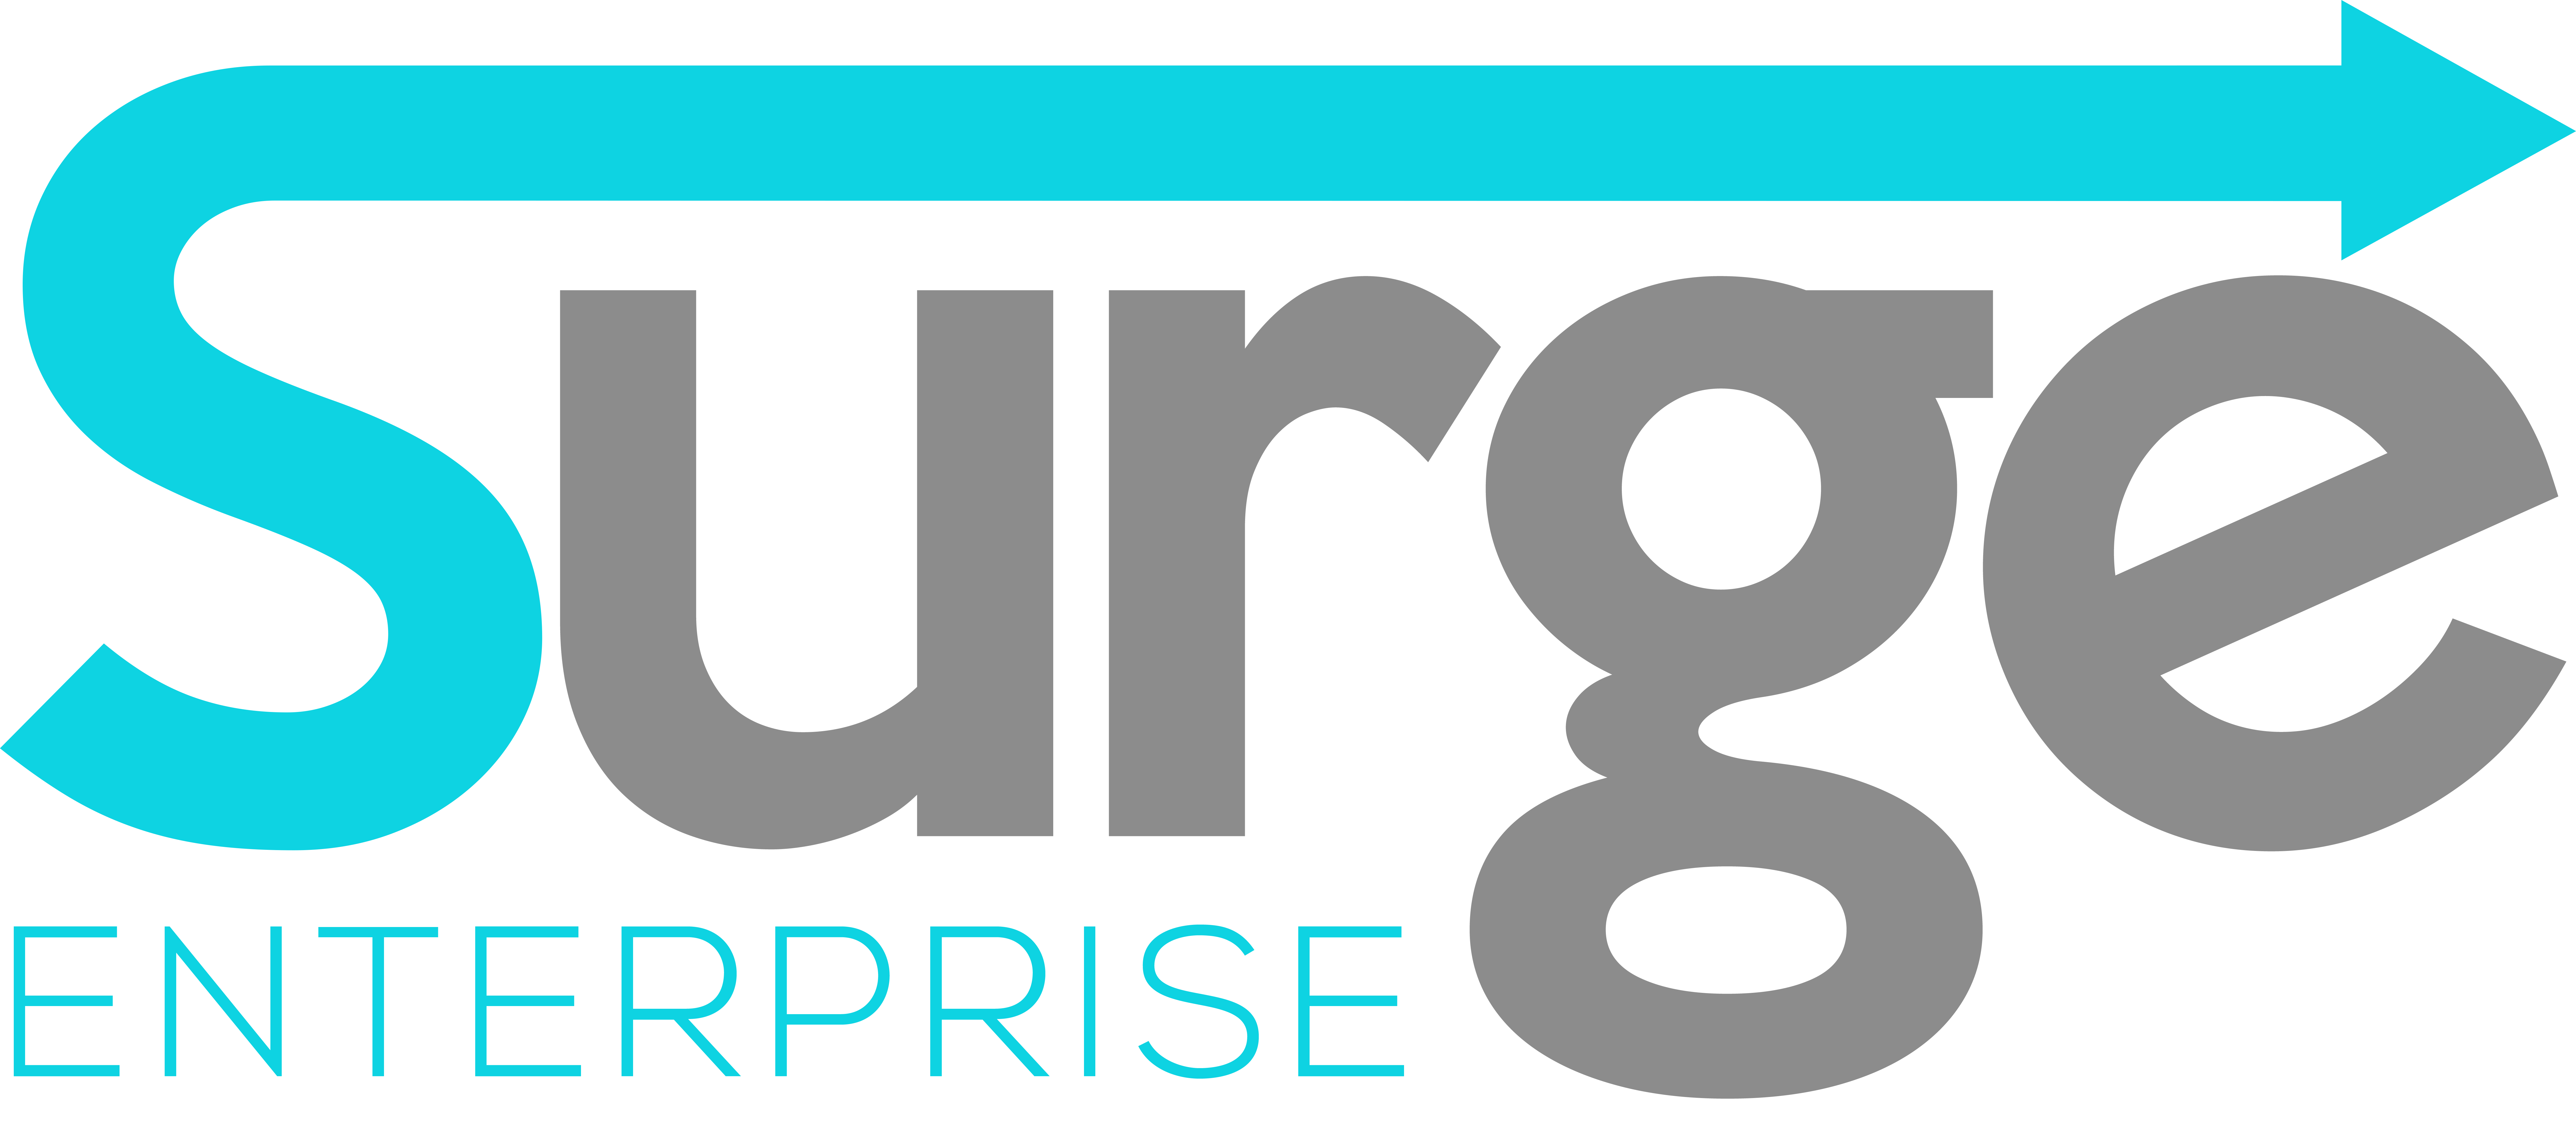 MGC Partners With Surge Enterprise